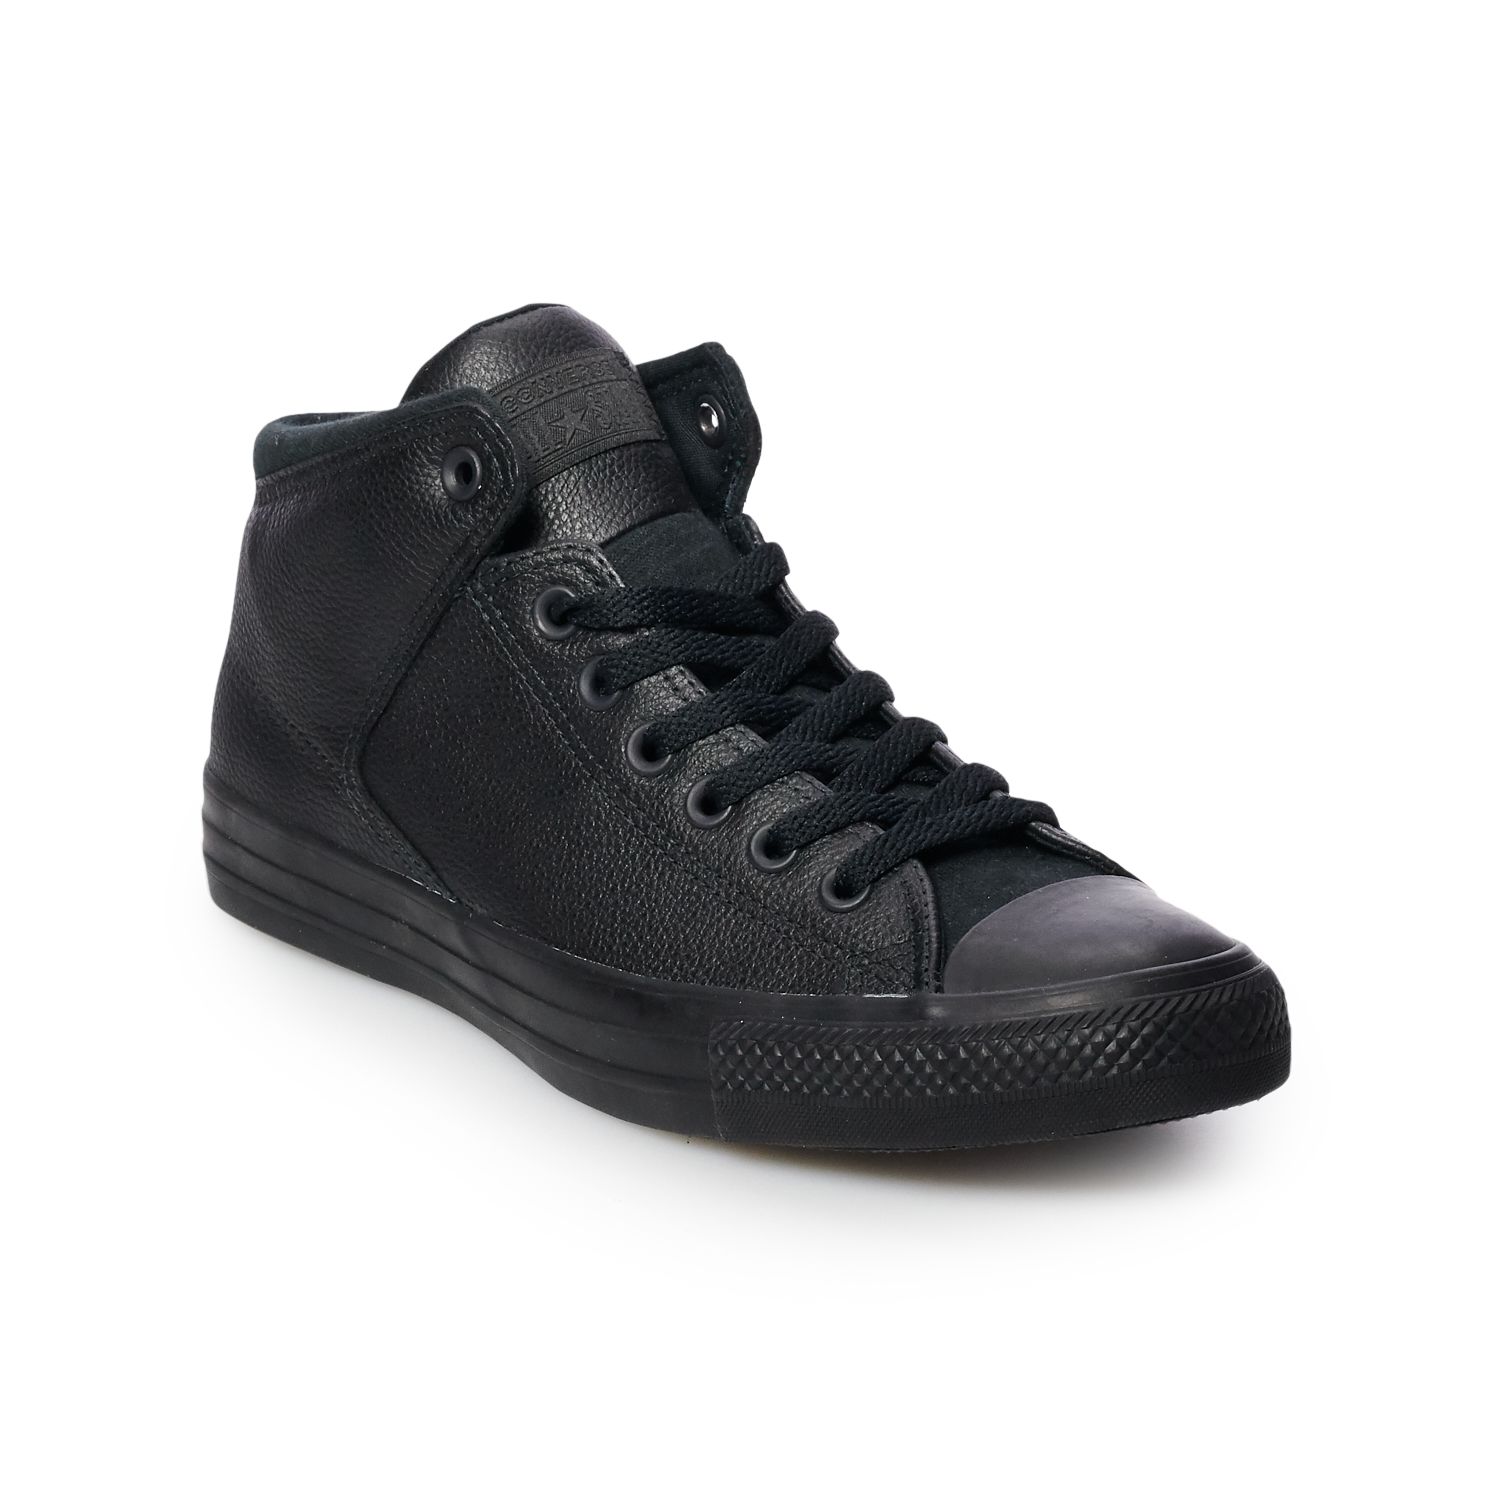 converse men's street leather high top sneaker